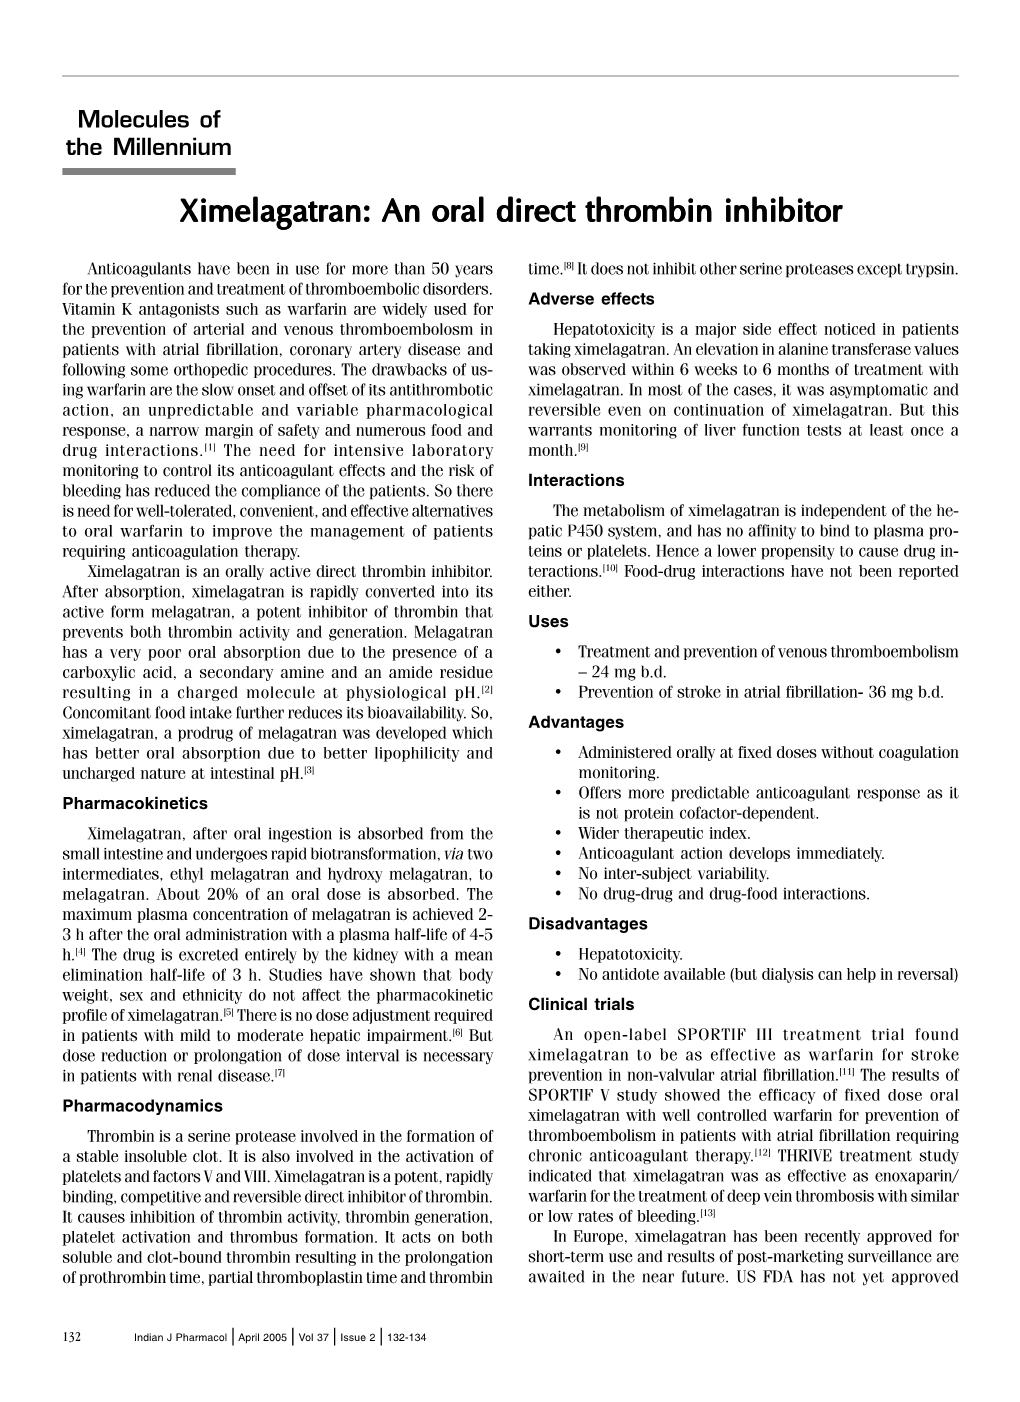 Ximelagatran: an Oral Direct Thrombin Inhibitor